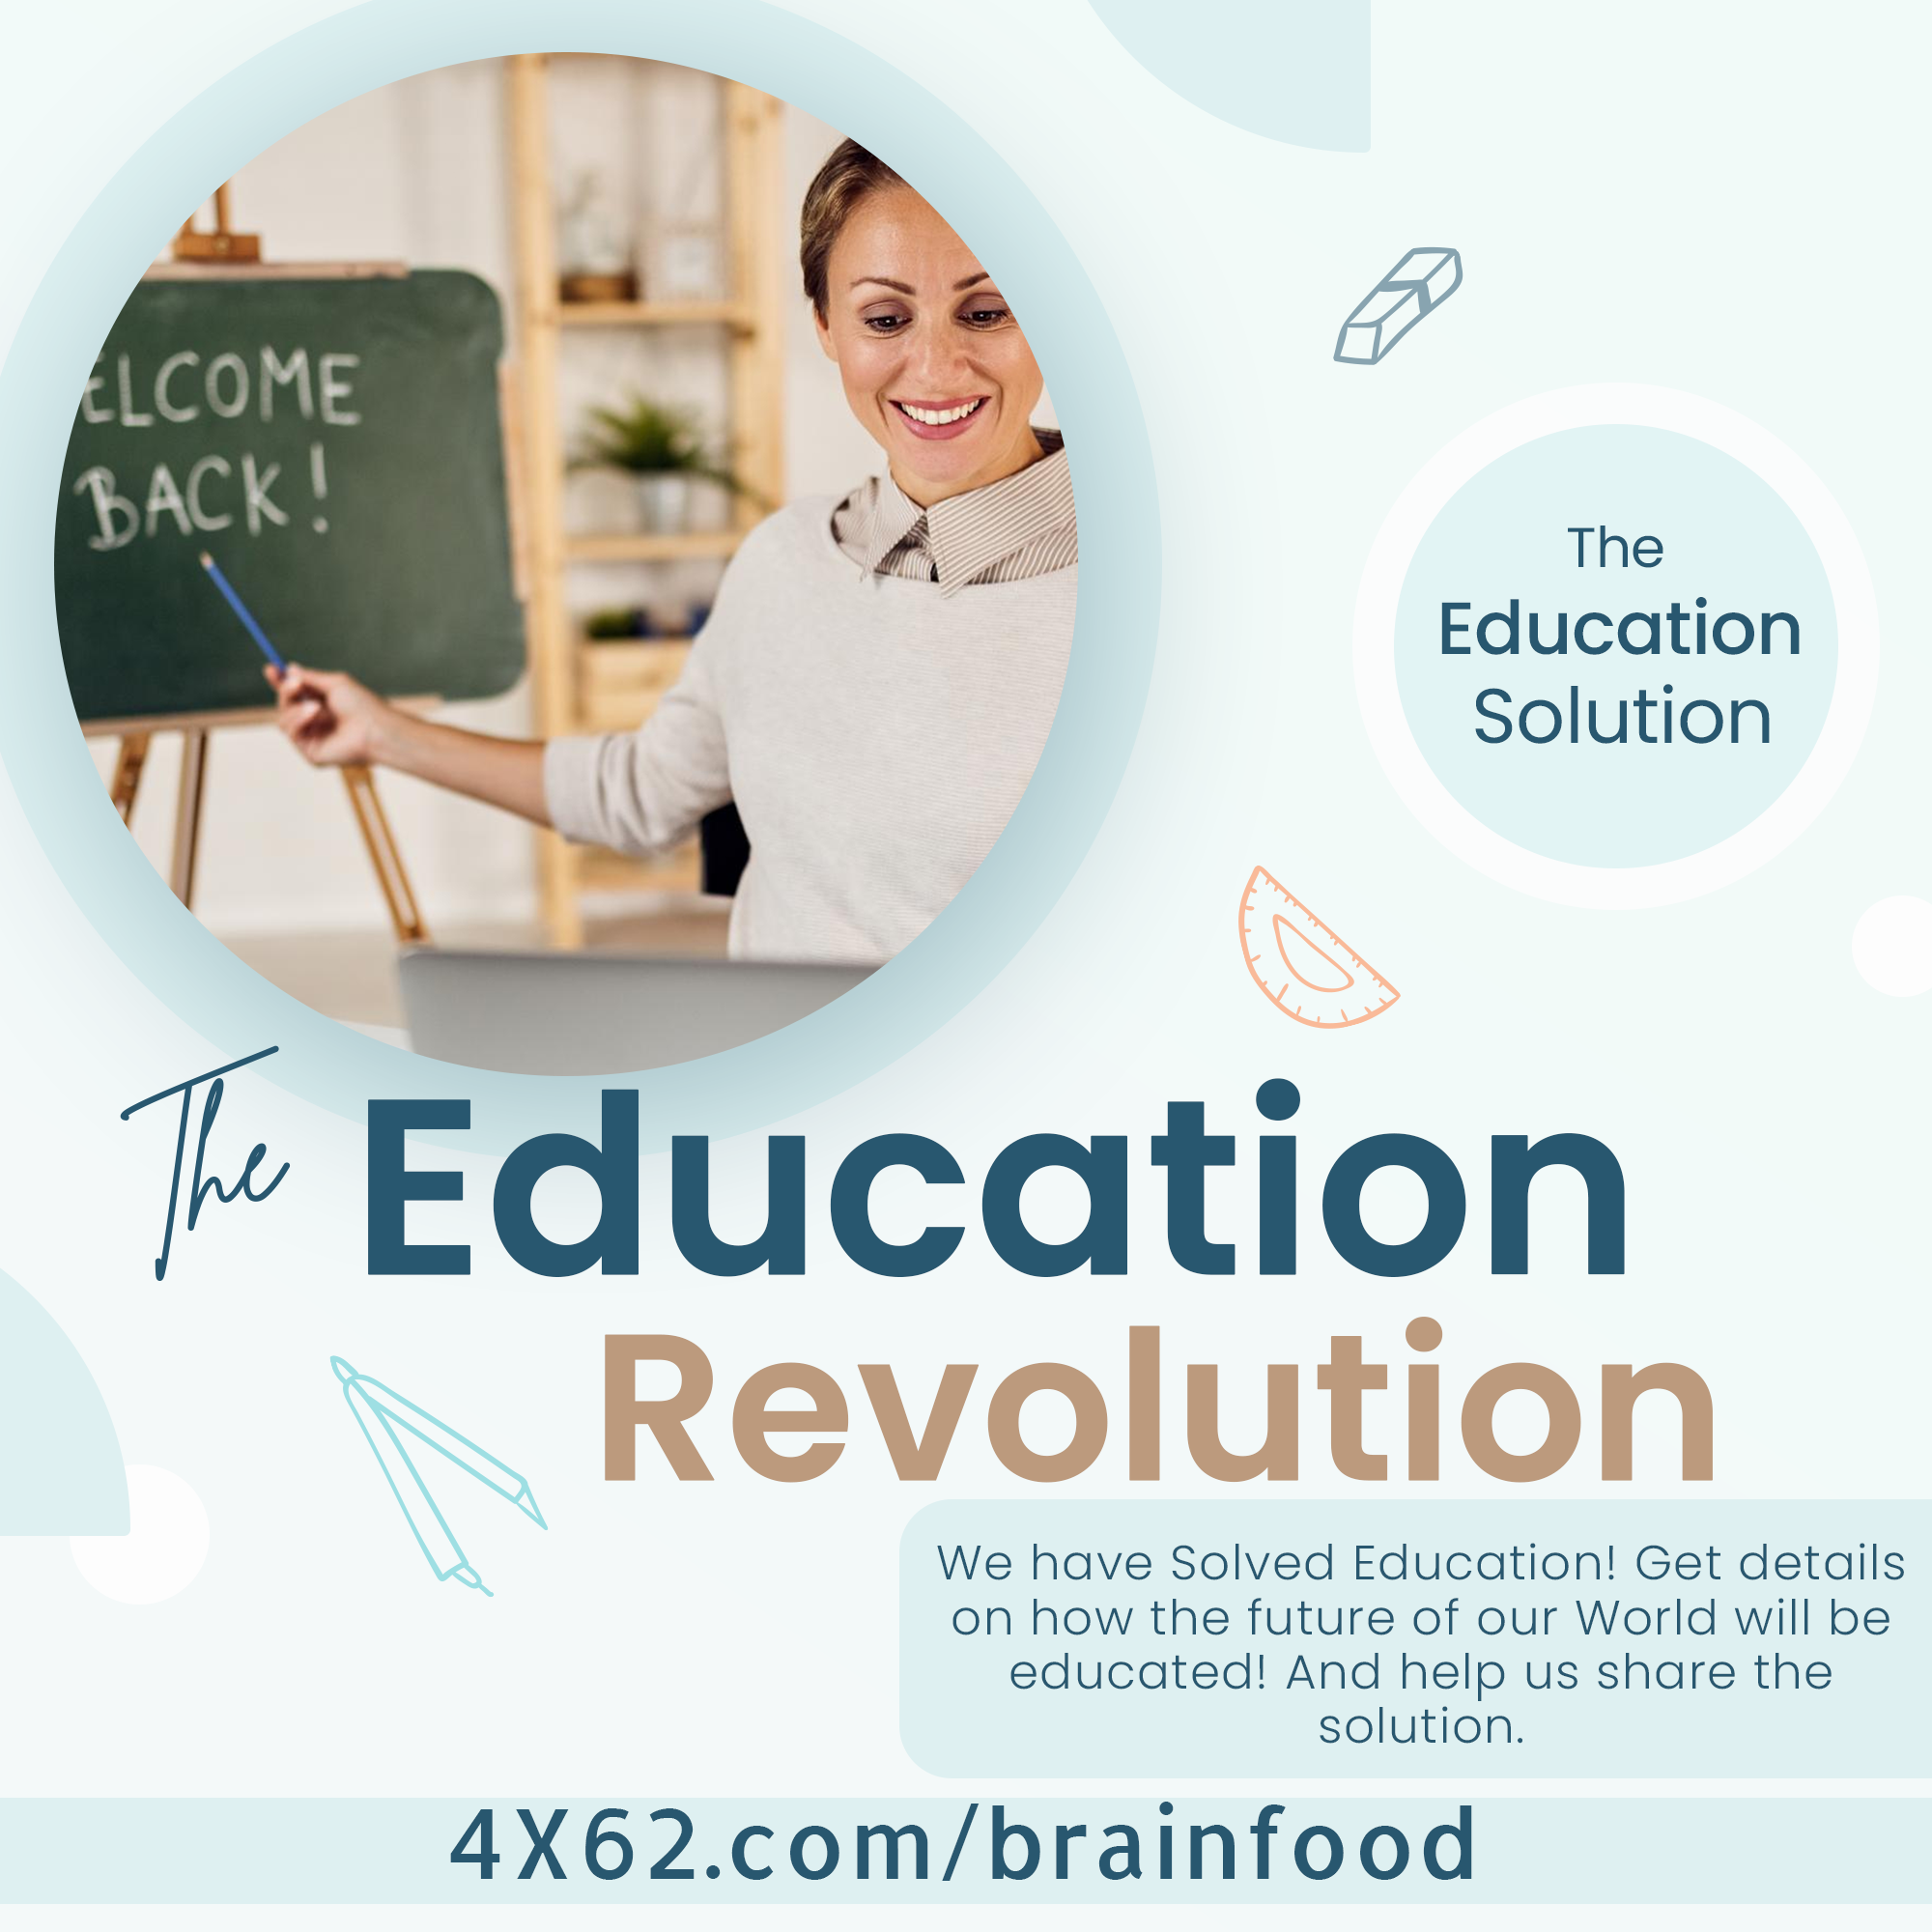 Brainfood academy: home school. The new education Revolution